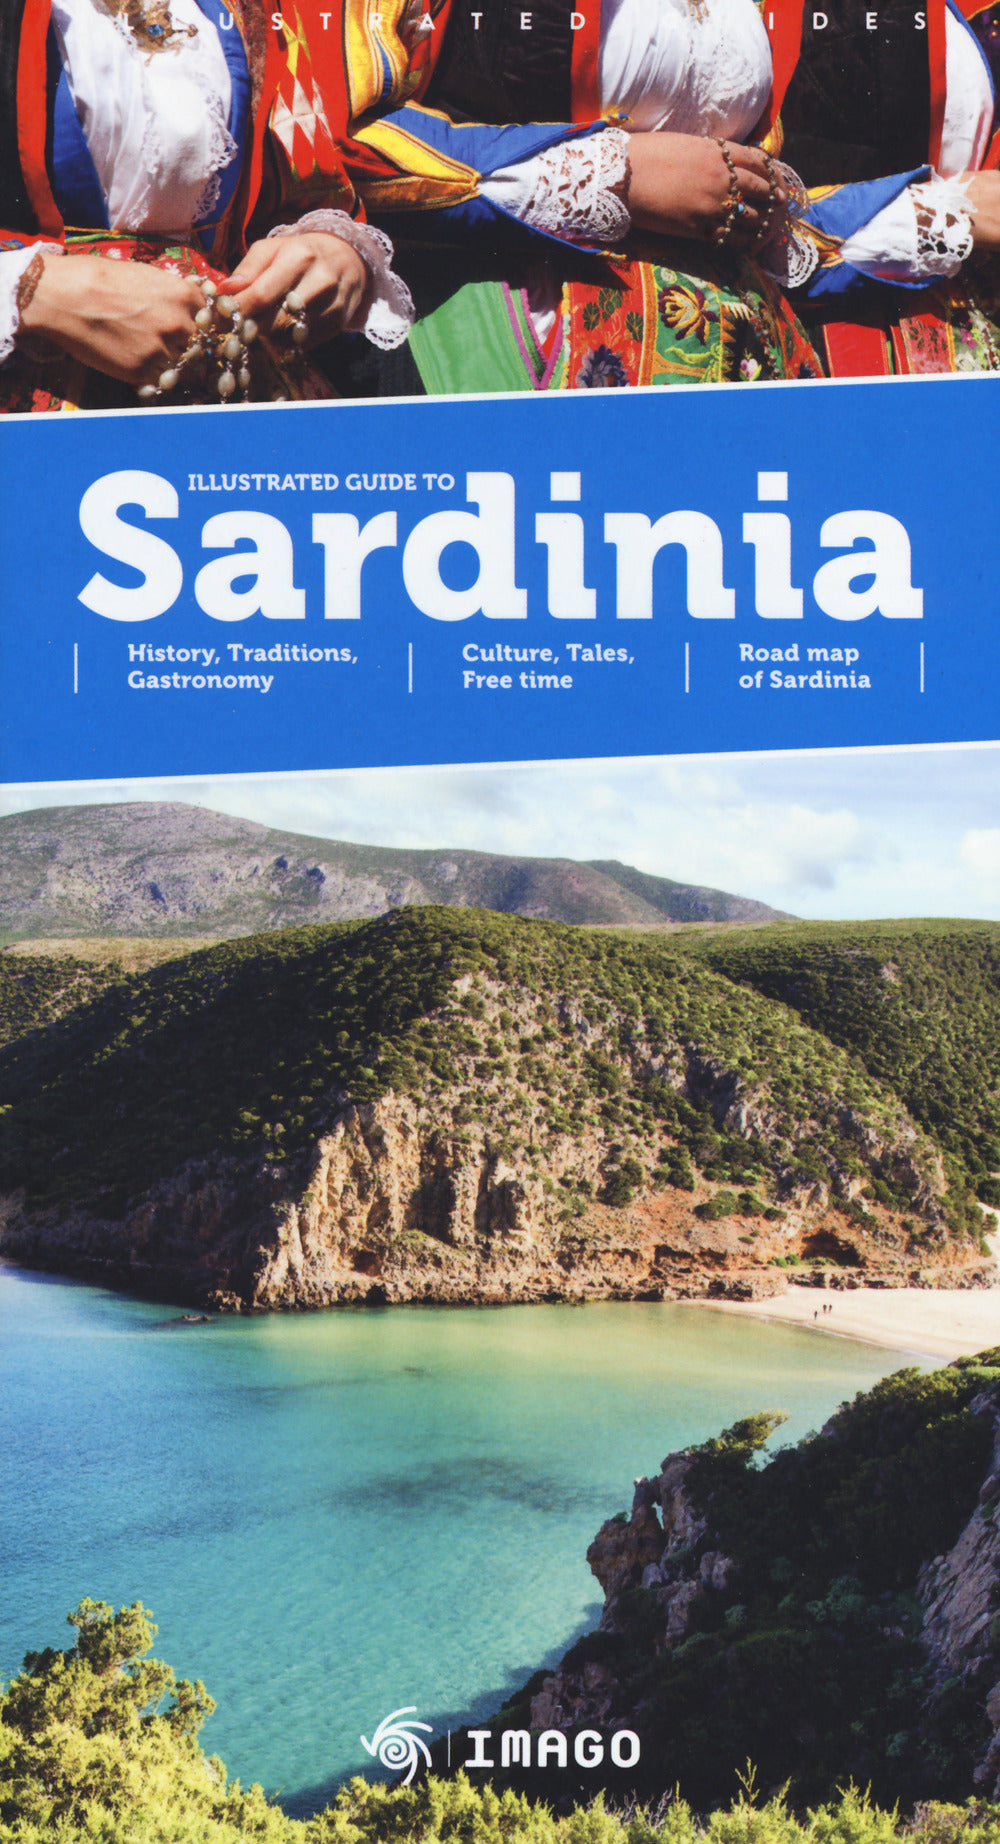 Illustrated guide to Sardinia.